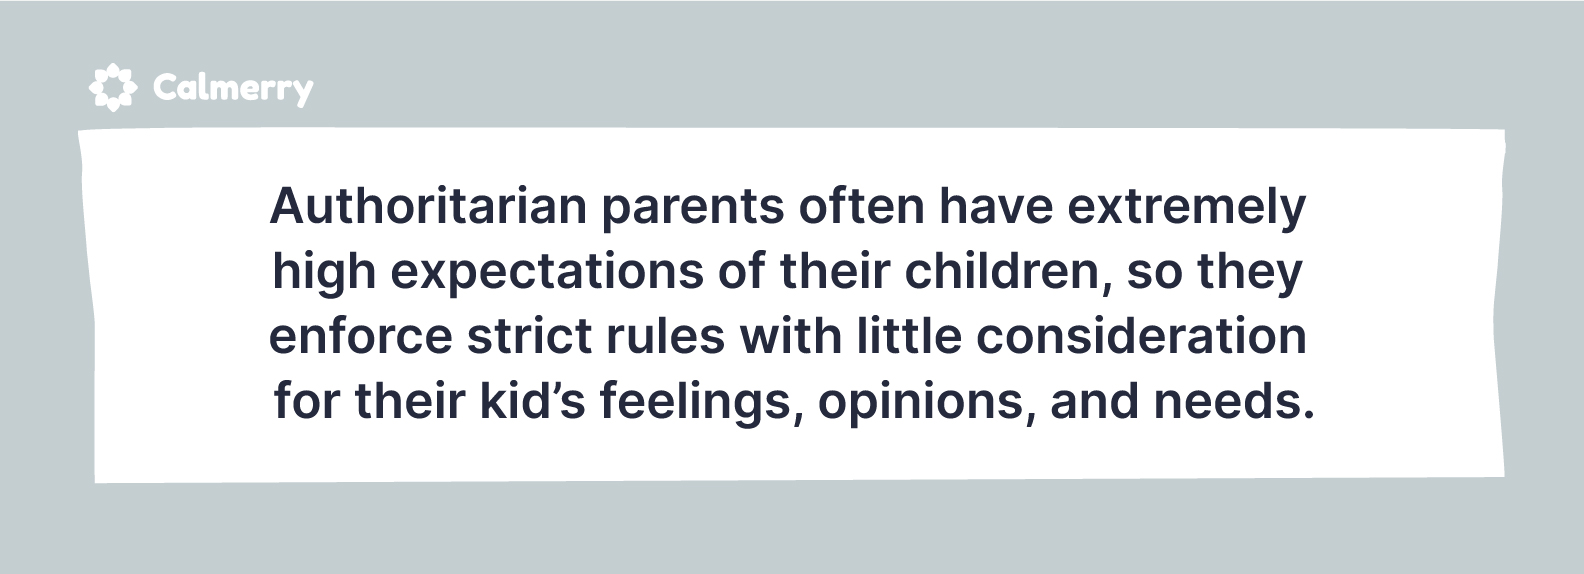 authoritarian parenting characteristics